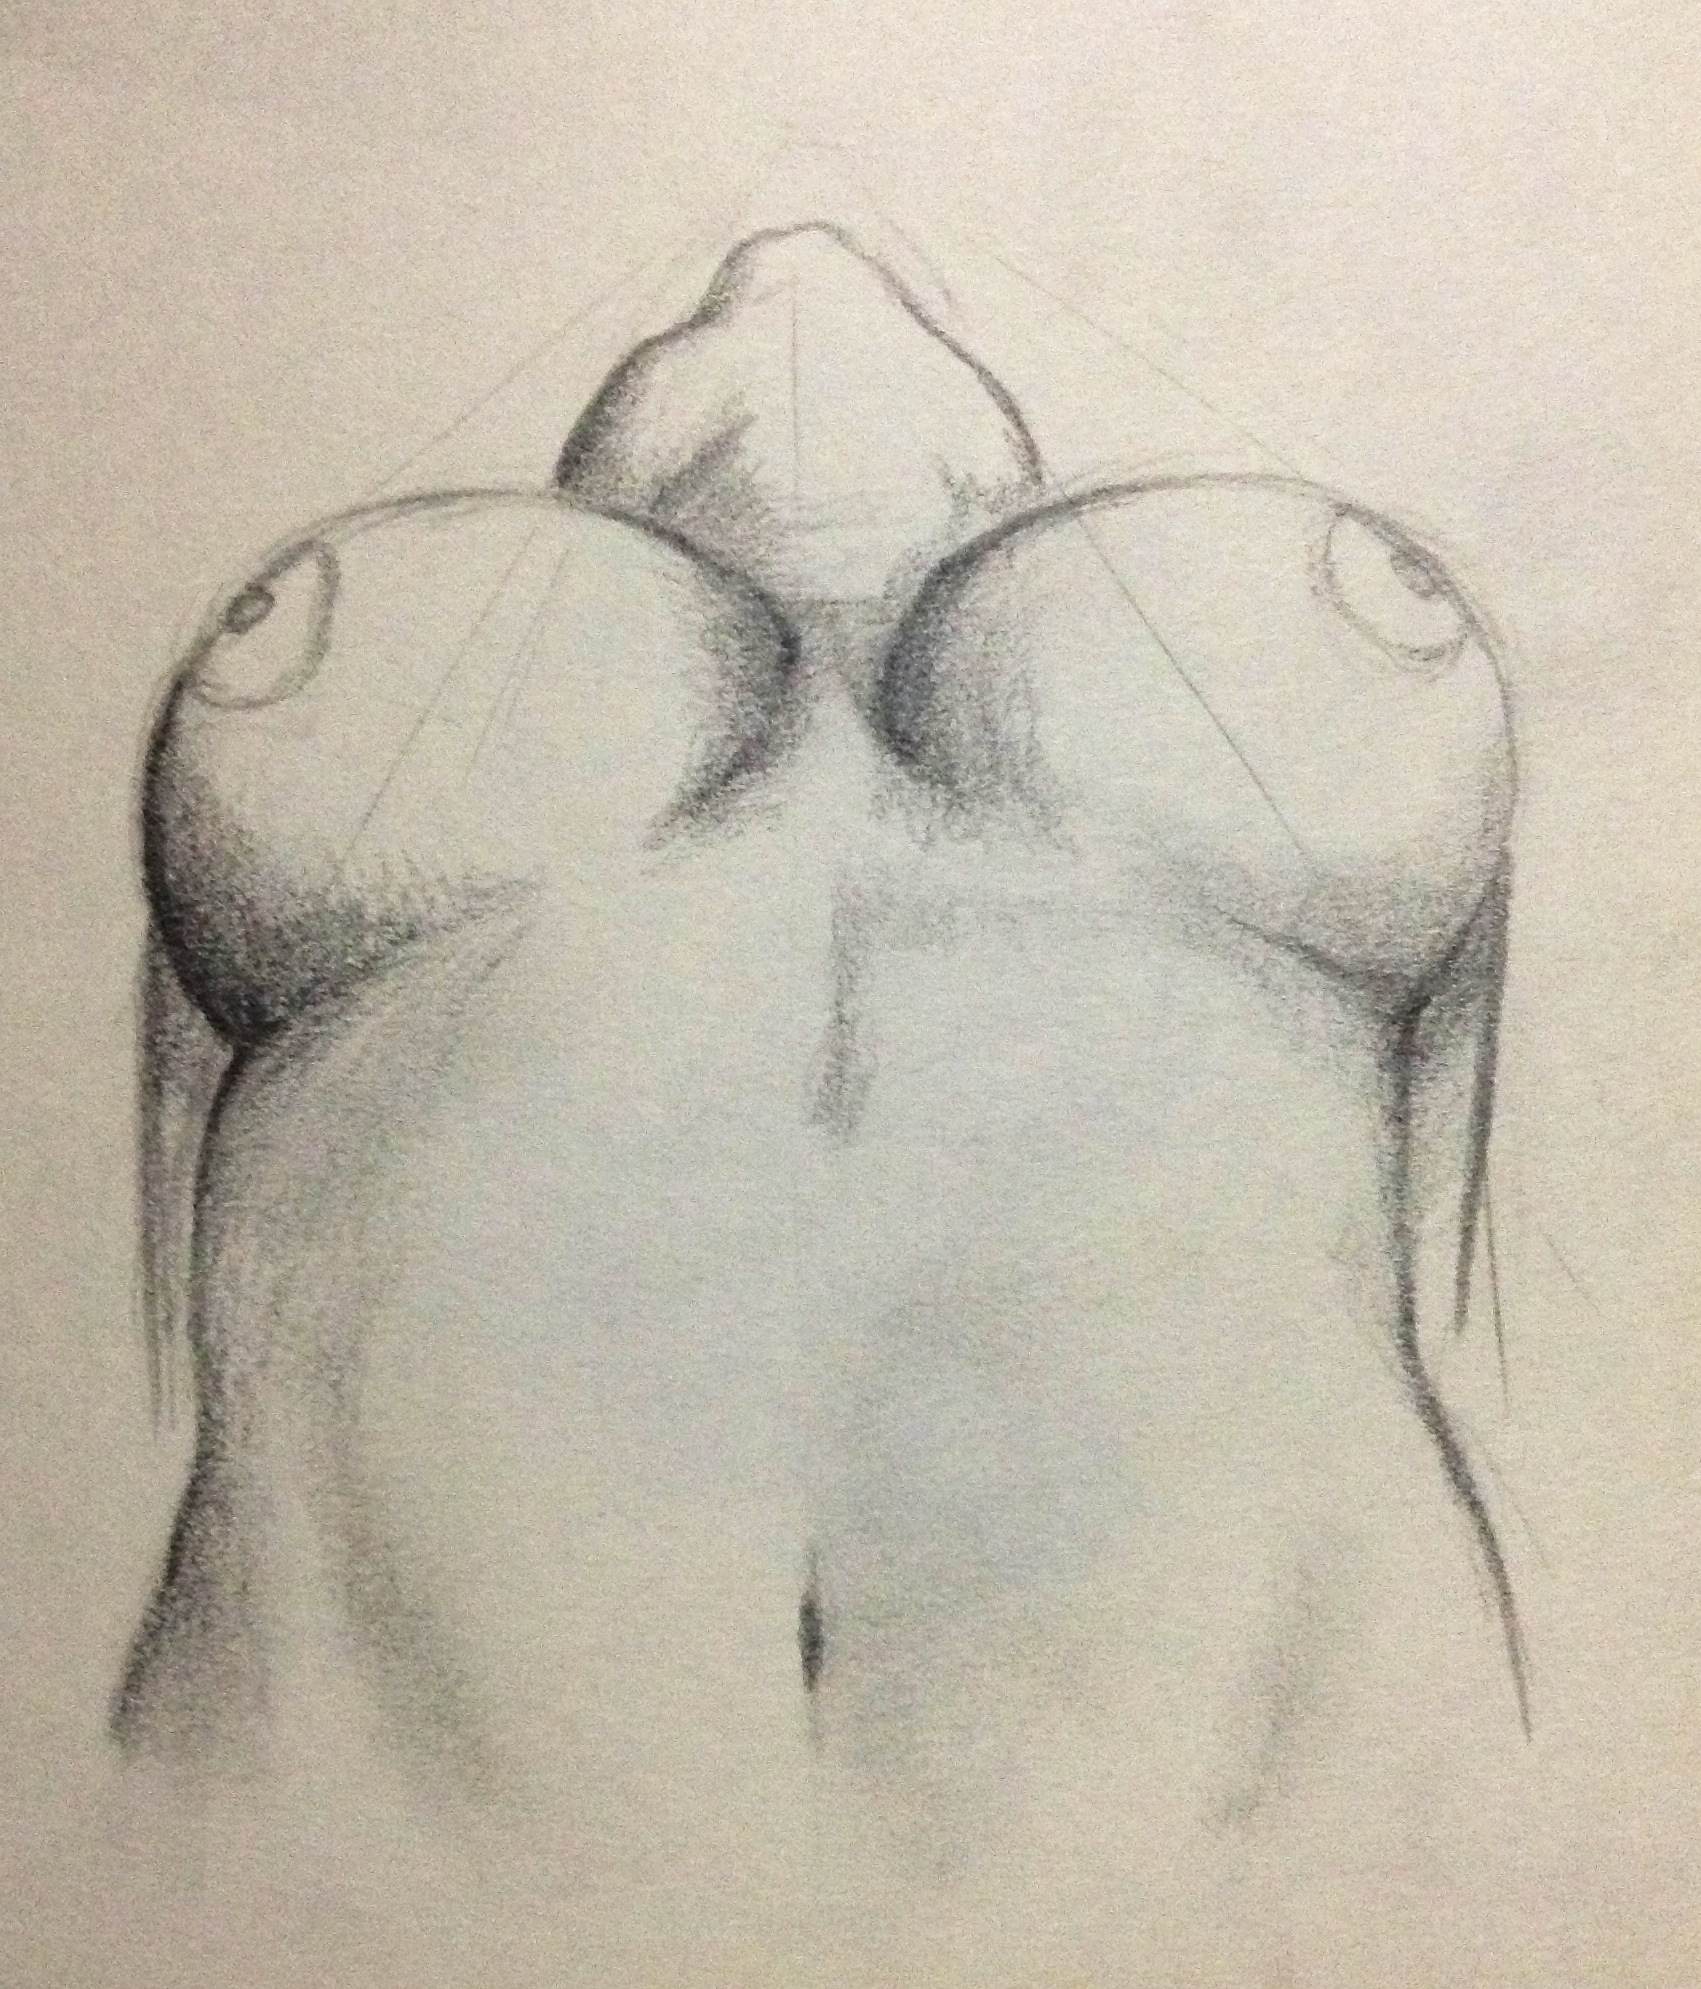 Nude Latina Drawing - Pencil sketches nude women.